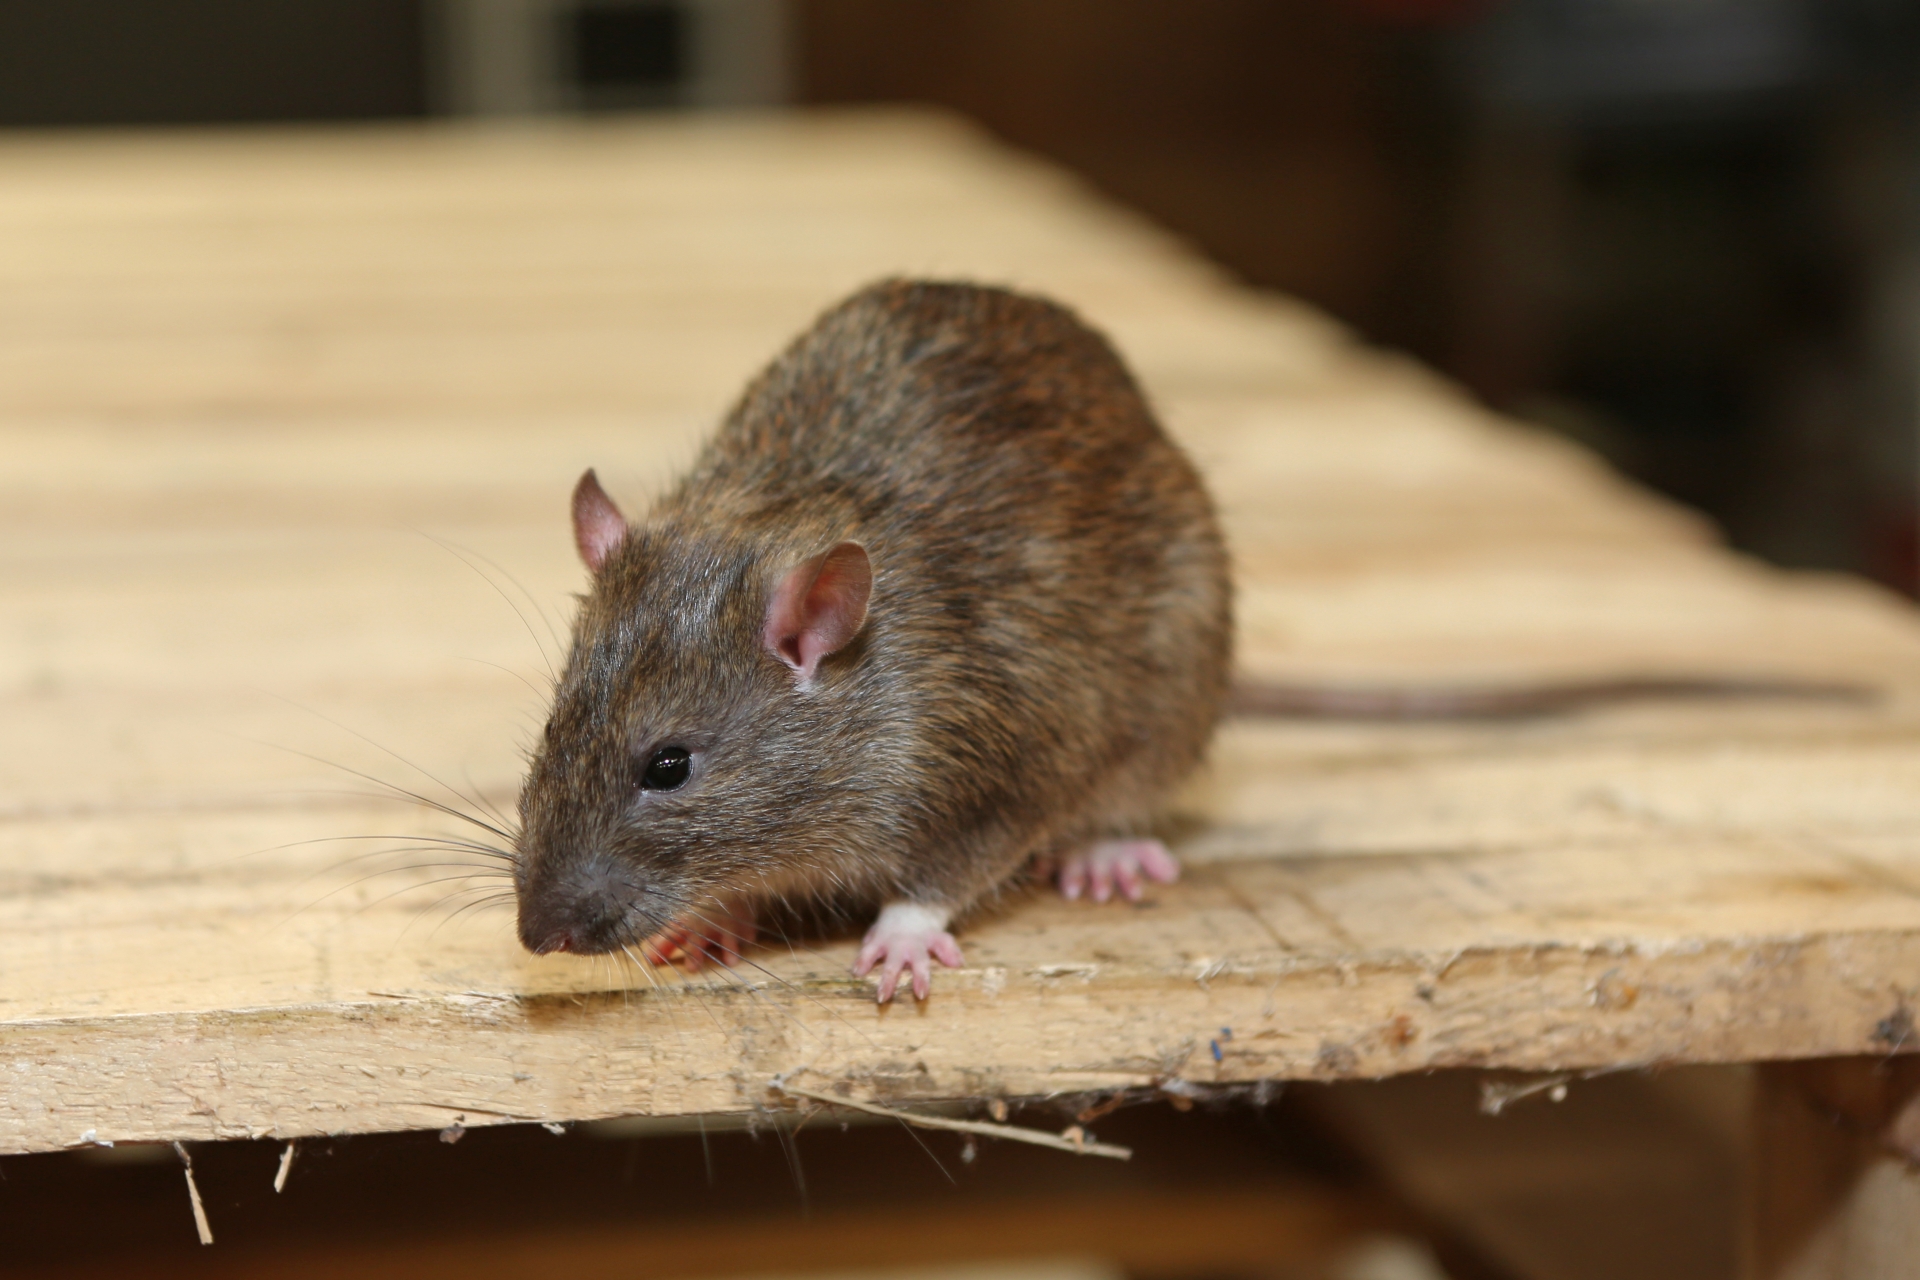 Rat extermination, Pest Control in Manor Park, E12. Call Now 020 8166 9746